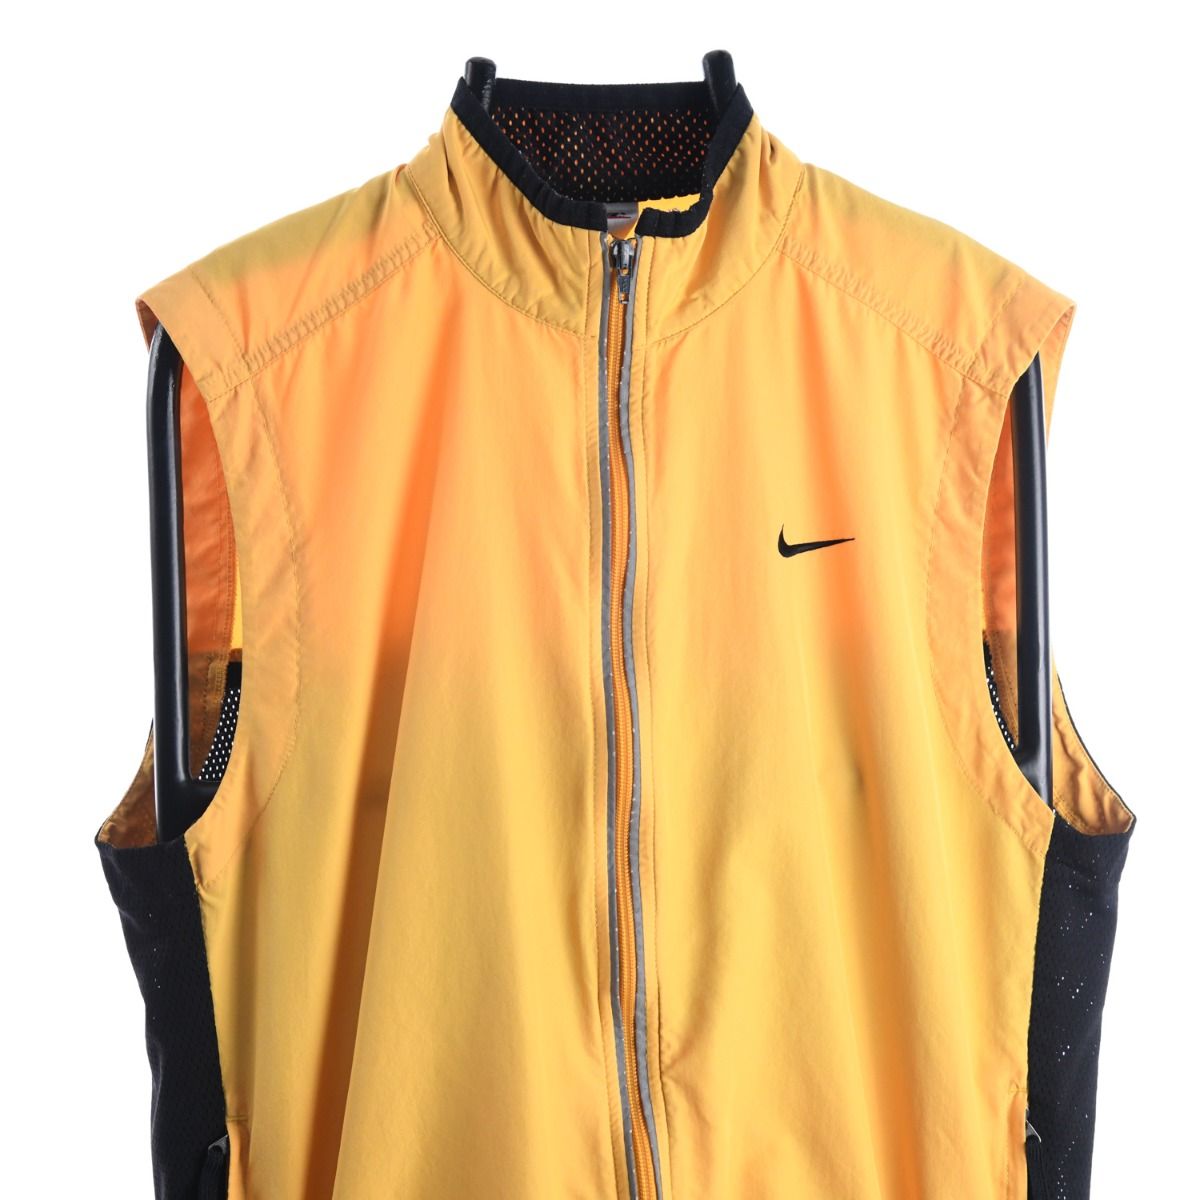 Nike 1990s Technical Vest